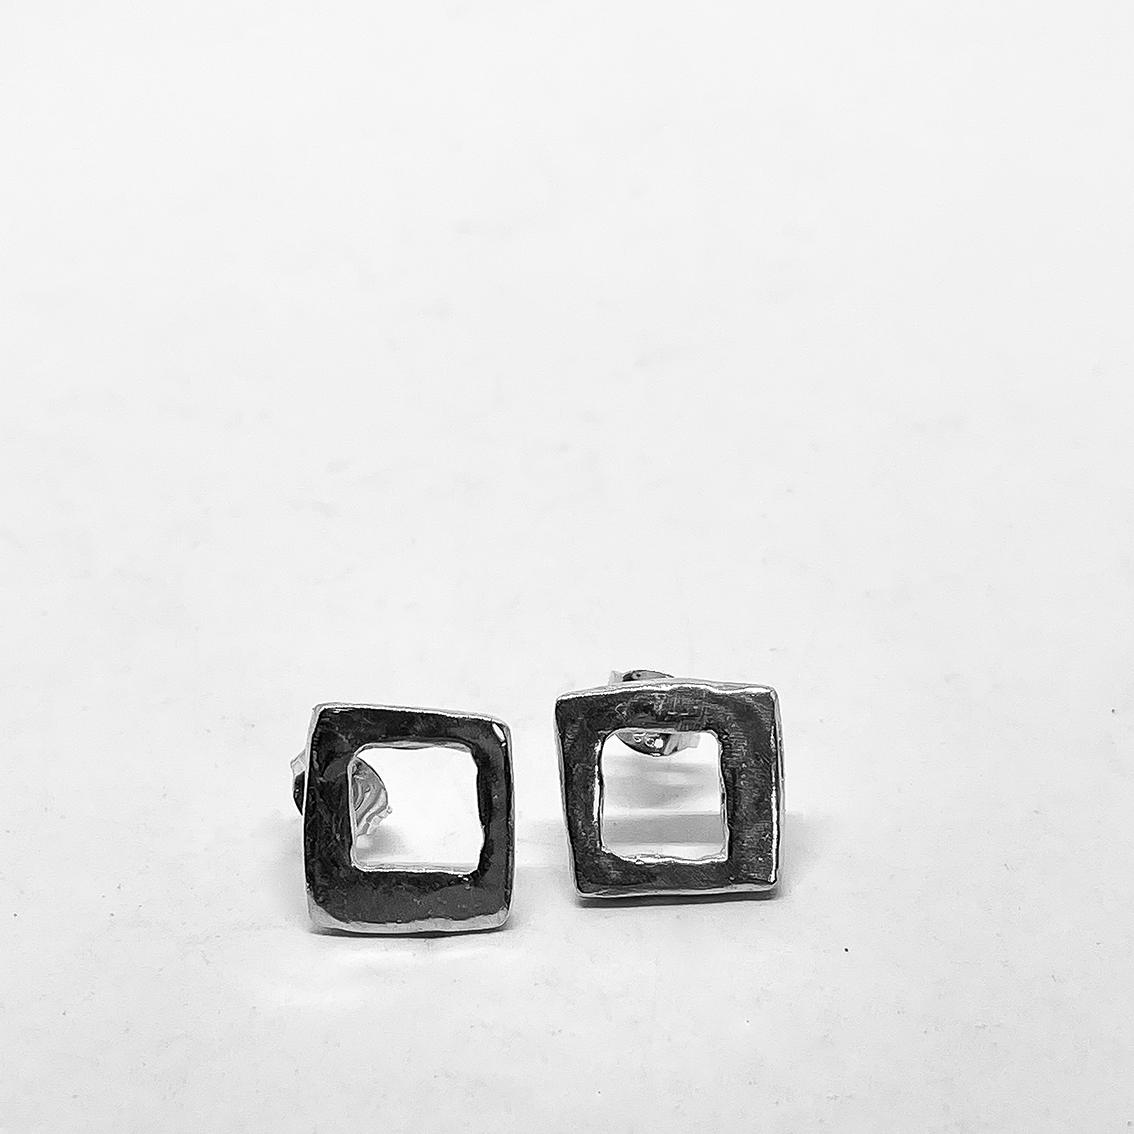 Modernist Earrings No. 5 - Geometric Cutout Square Stud Earrings in Sterling Silver